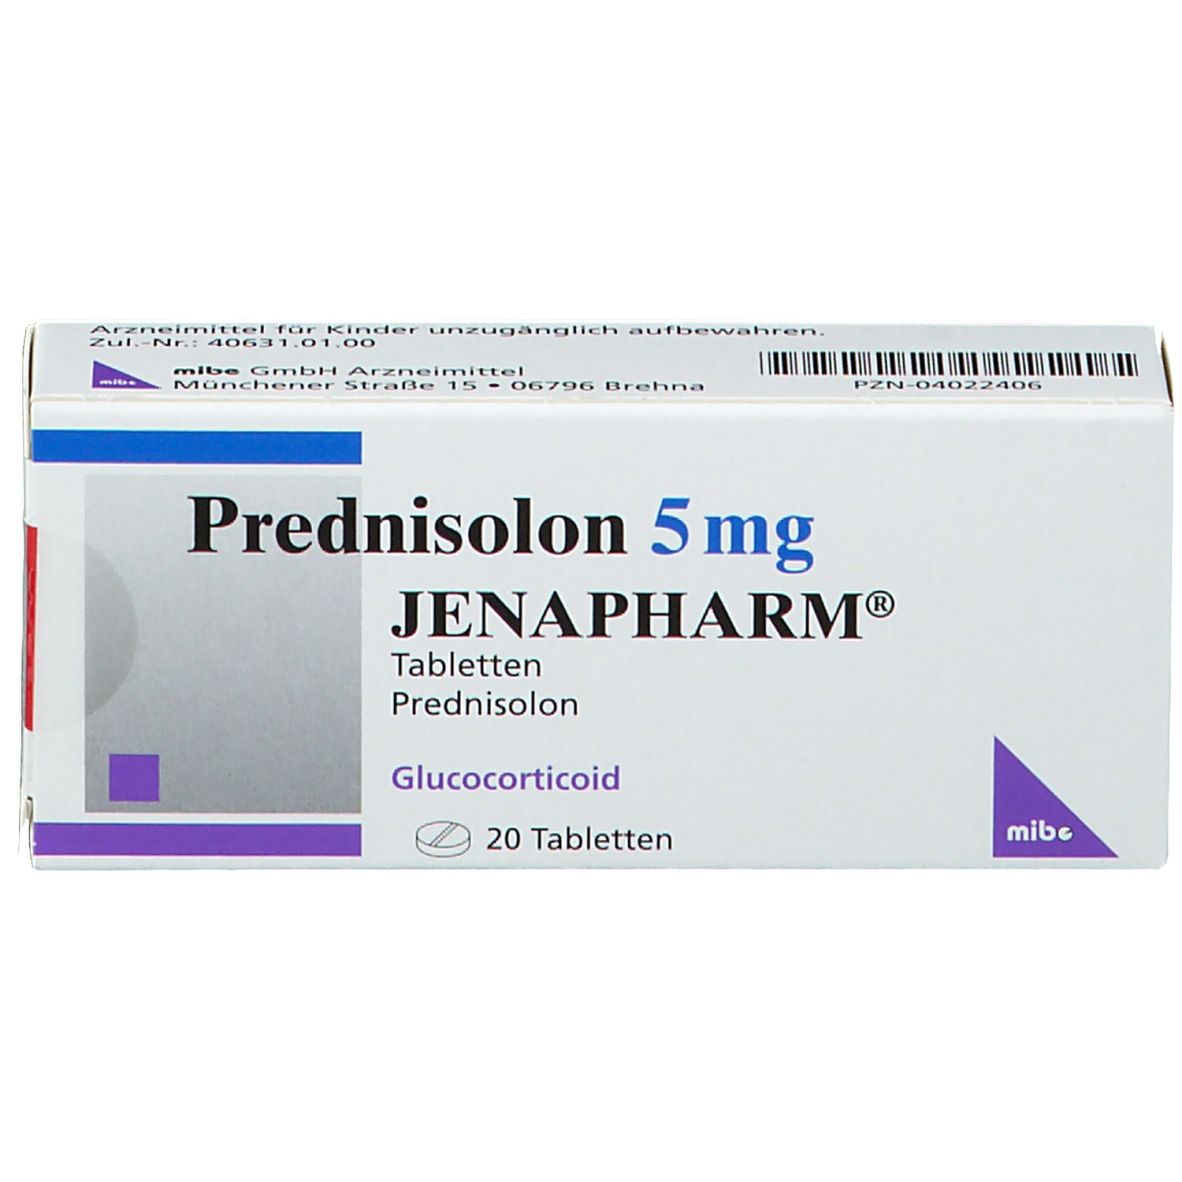 Prednisolon 5 mg JENAPHARM®